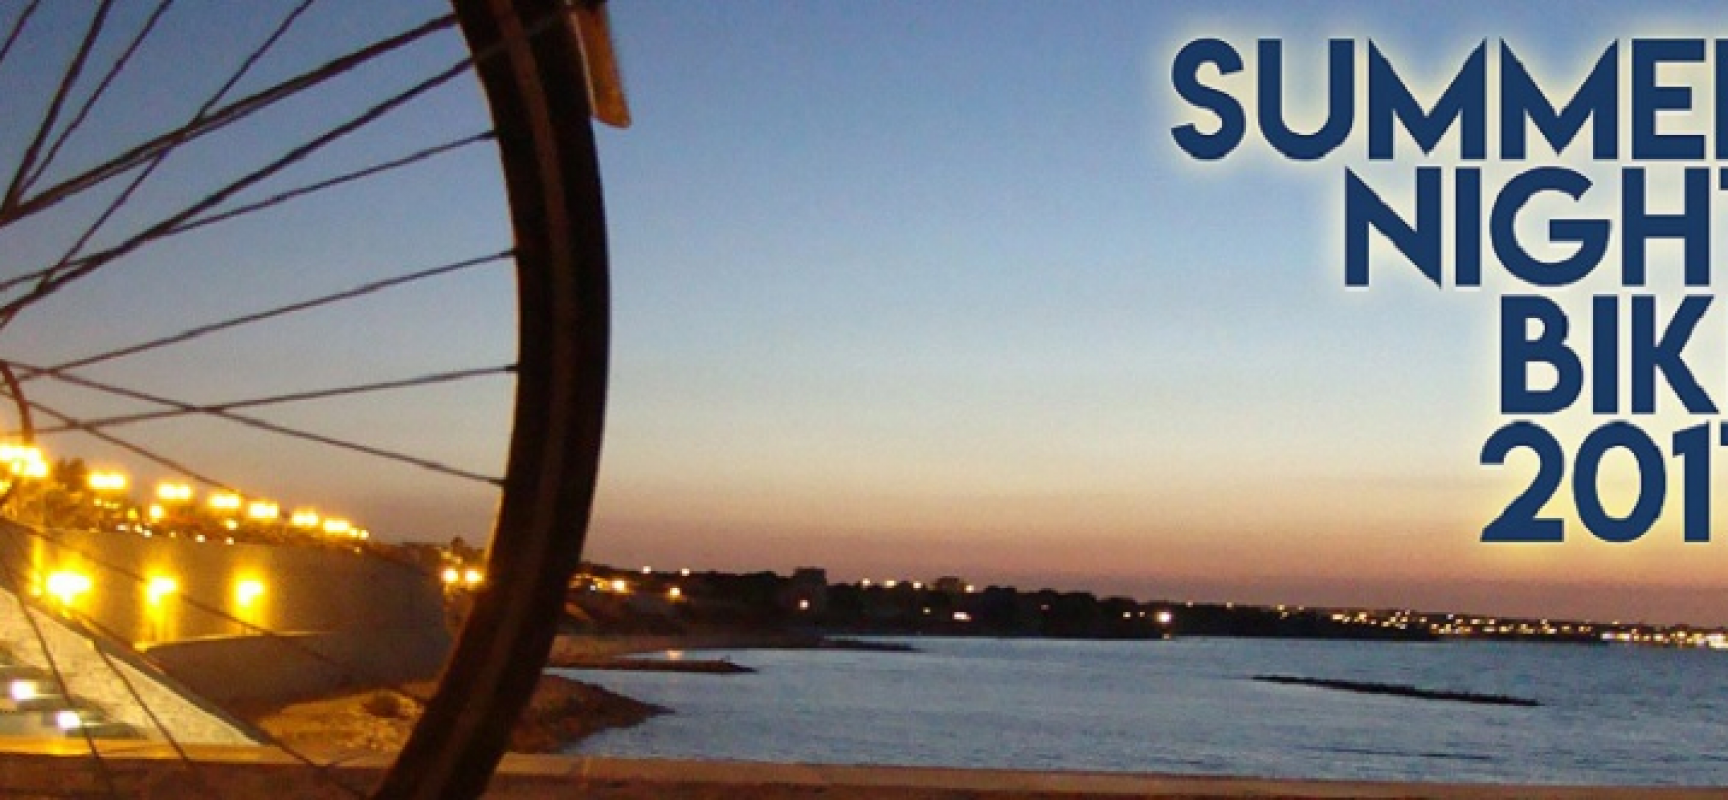 Summer night bike, domani sera l’ultima ciclopasseggiata targata Biciliæ